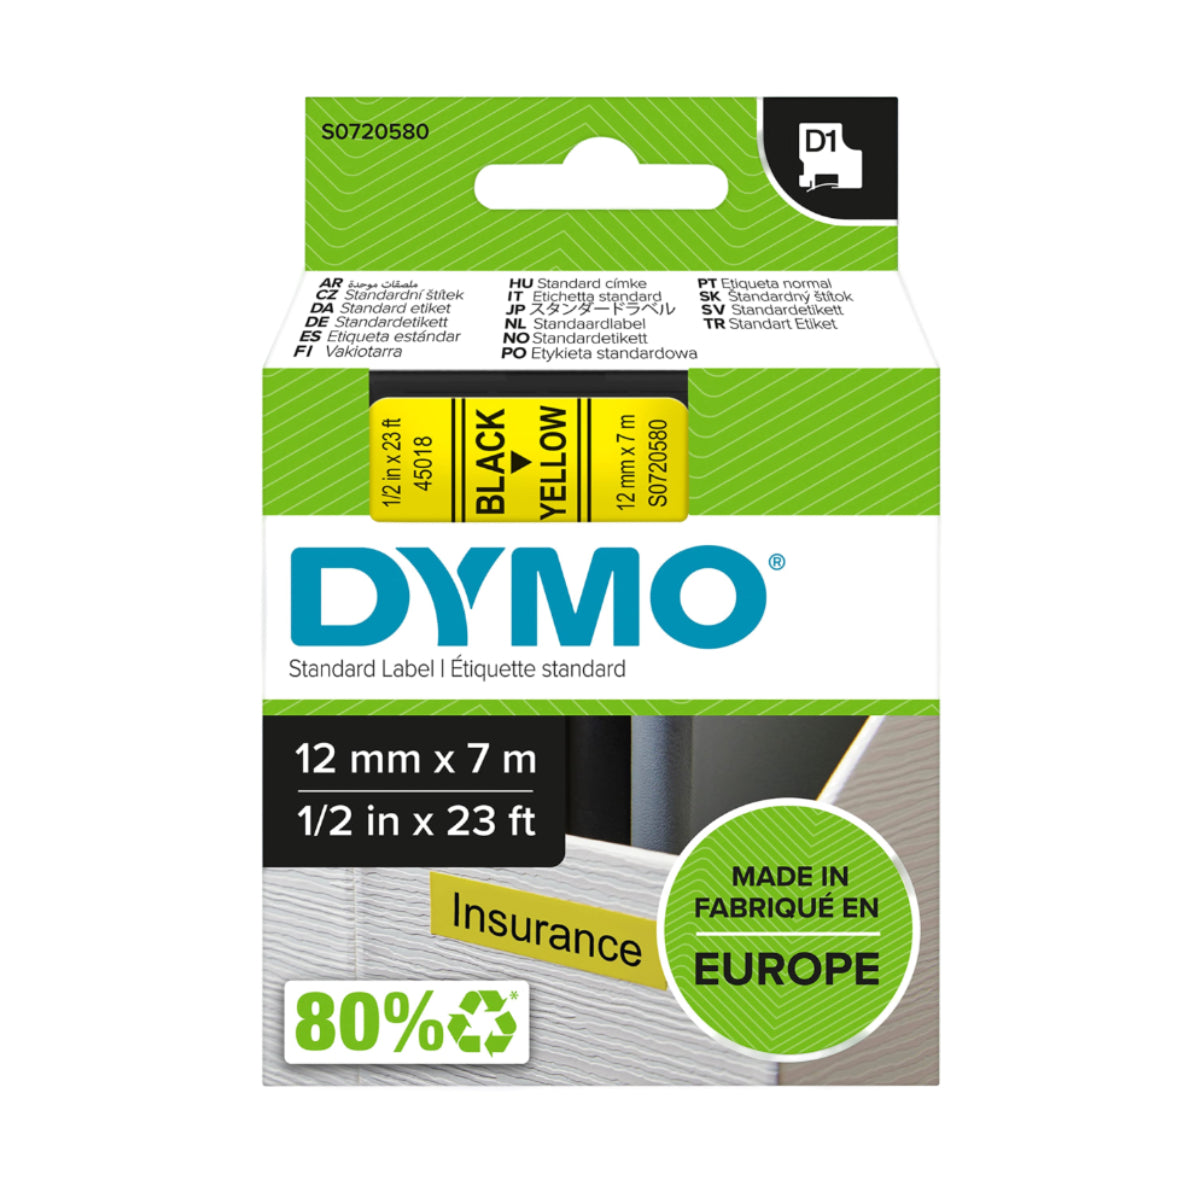 Dymo D1 Label Cassette 12 mm x 7 m, Black on Yellow - 45018